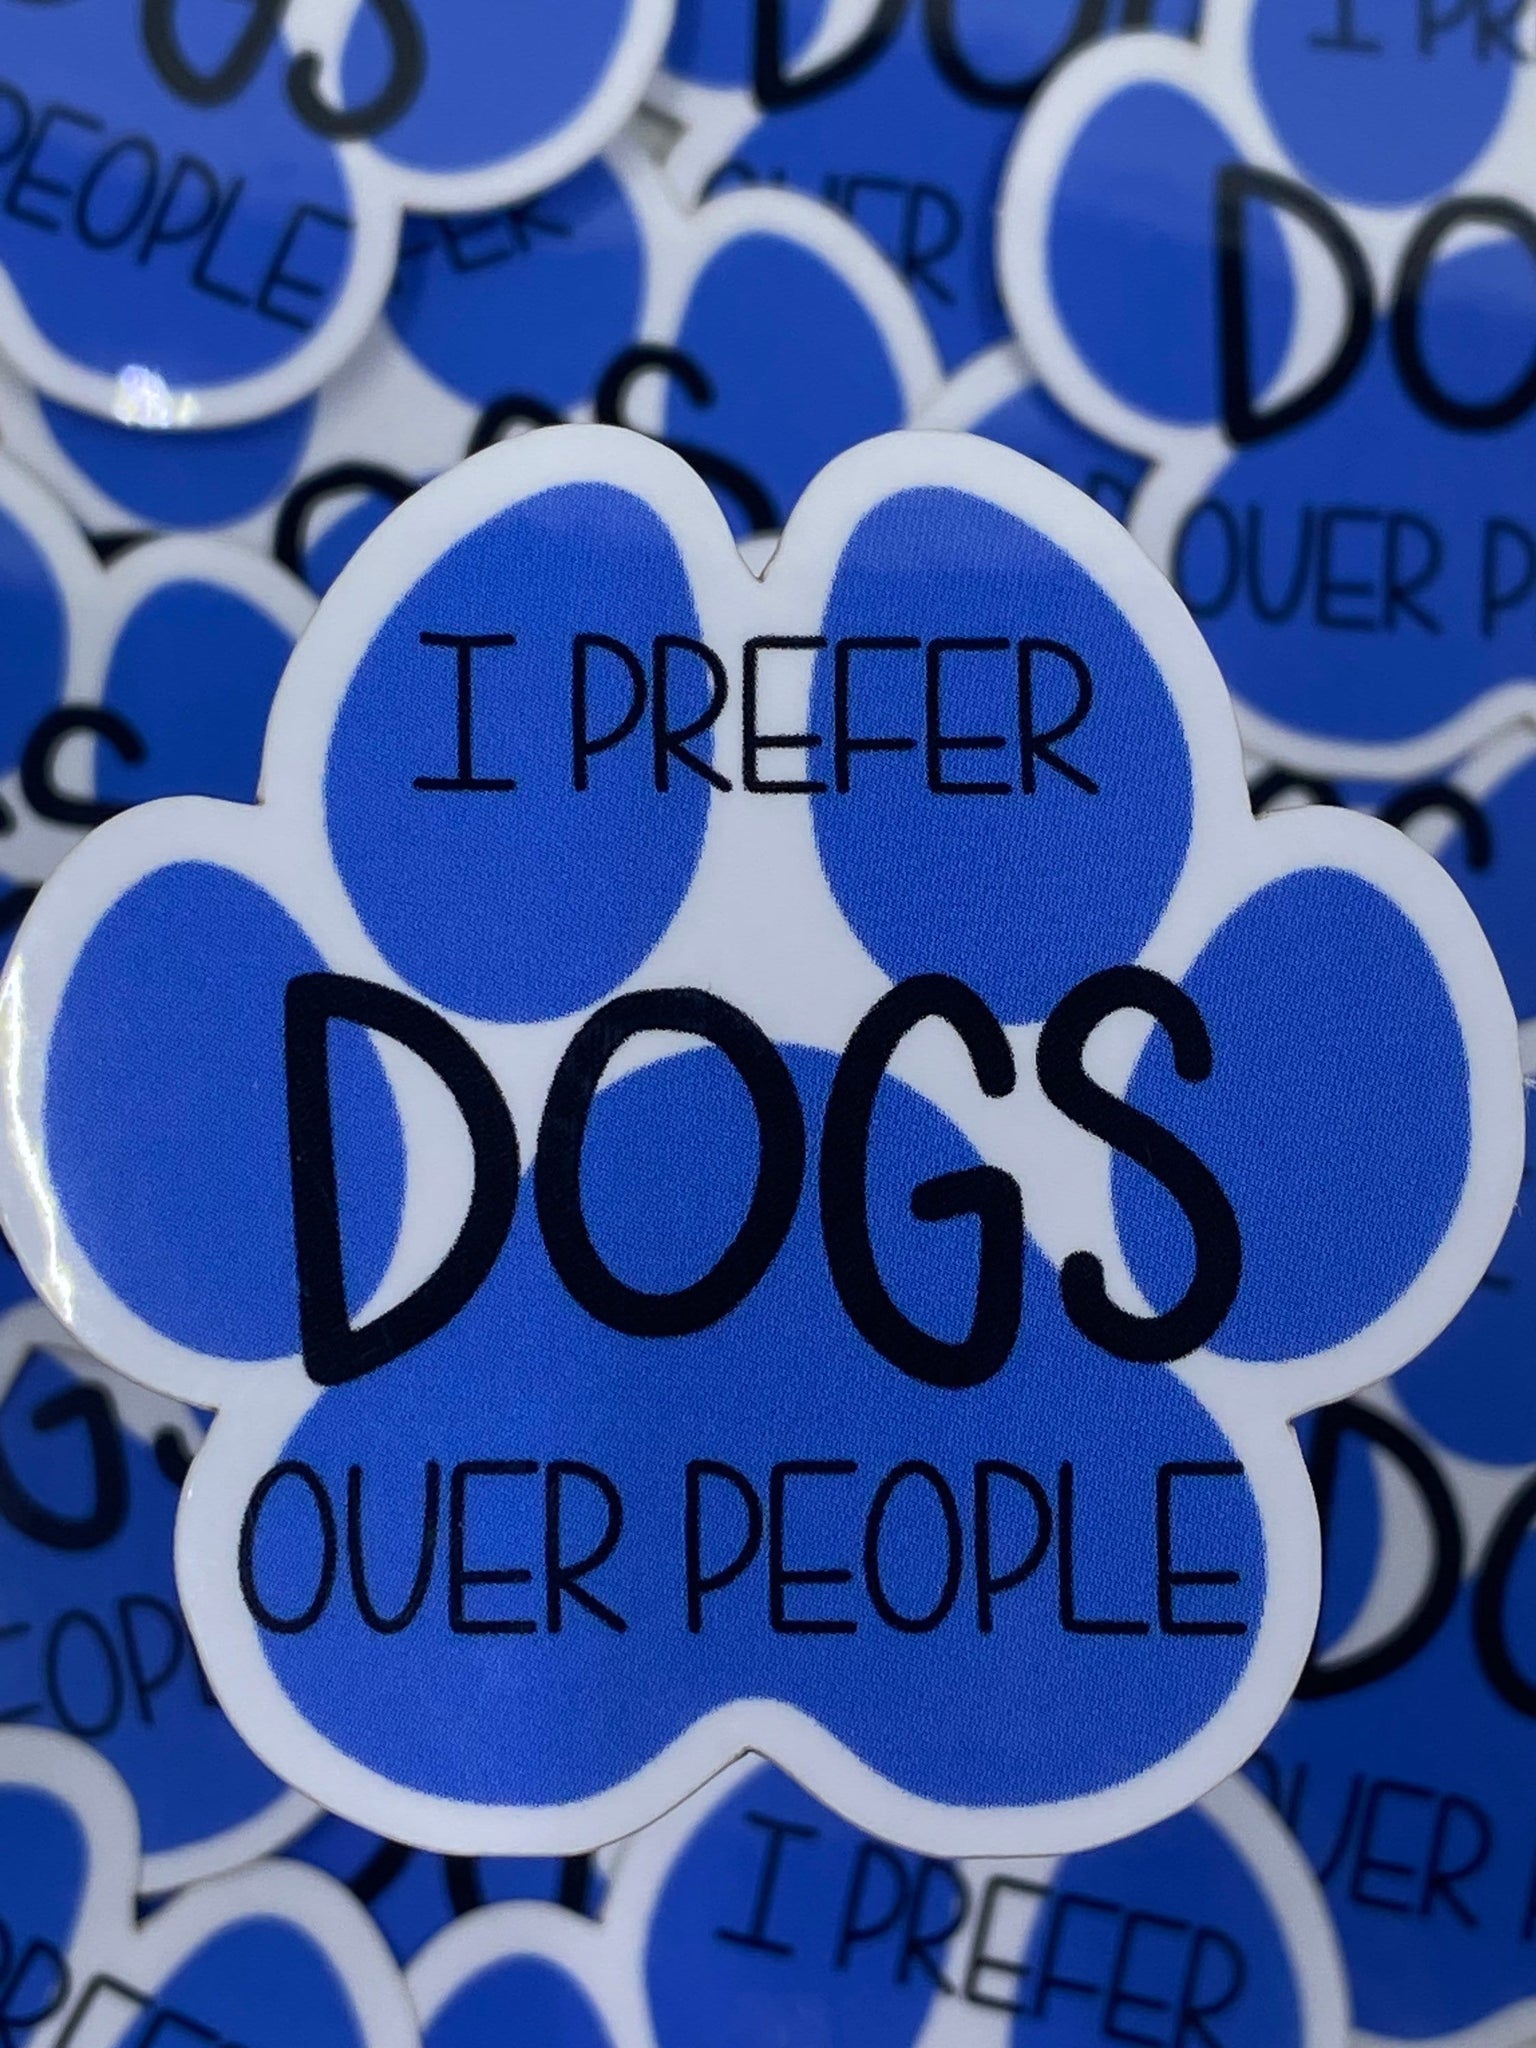 I Prefer Dogs Over People Vinyl Sticker